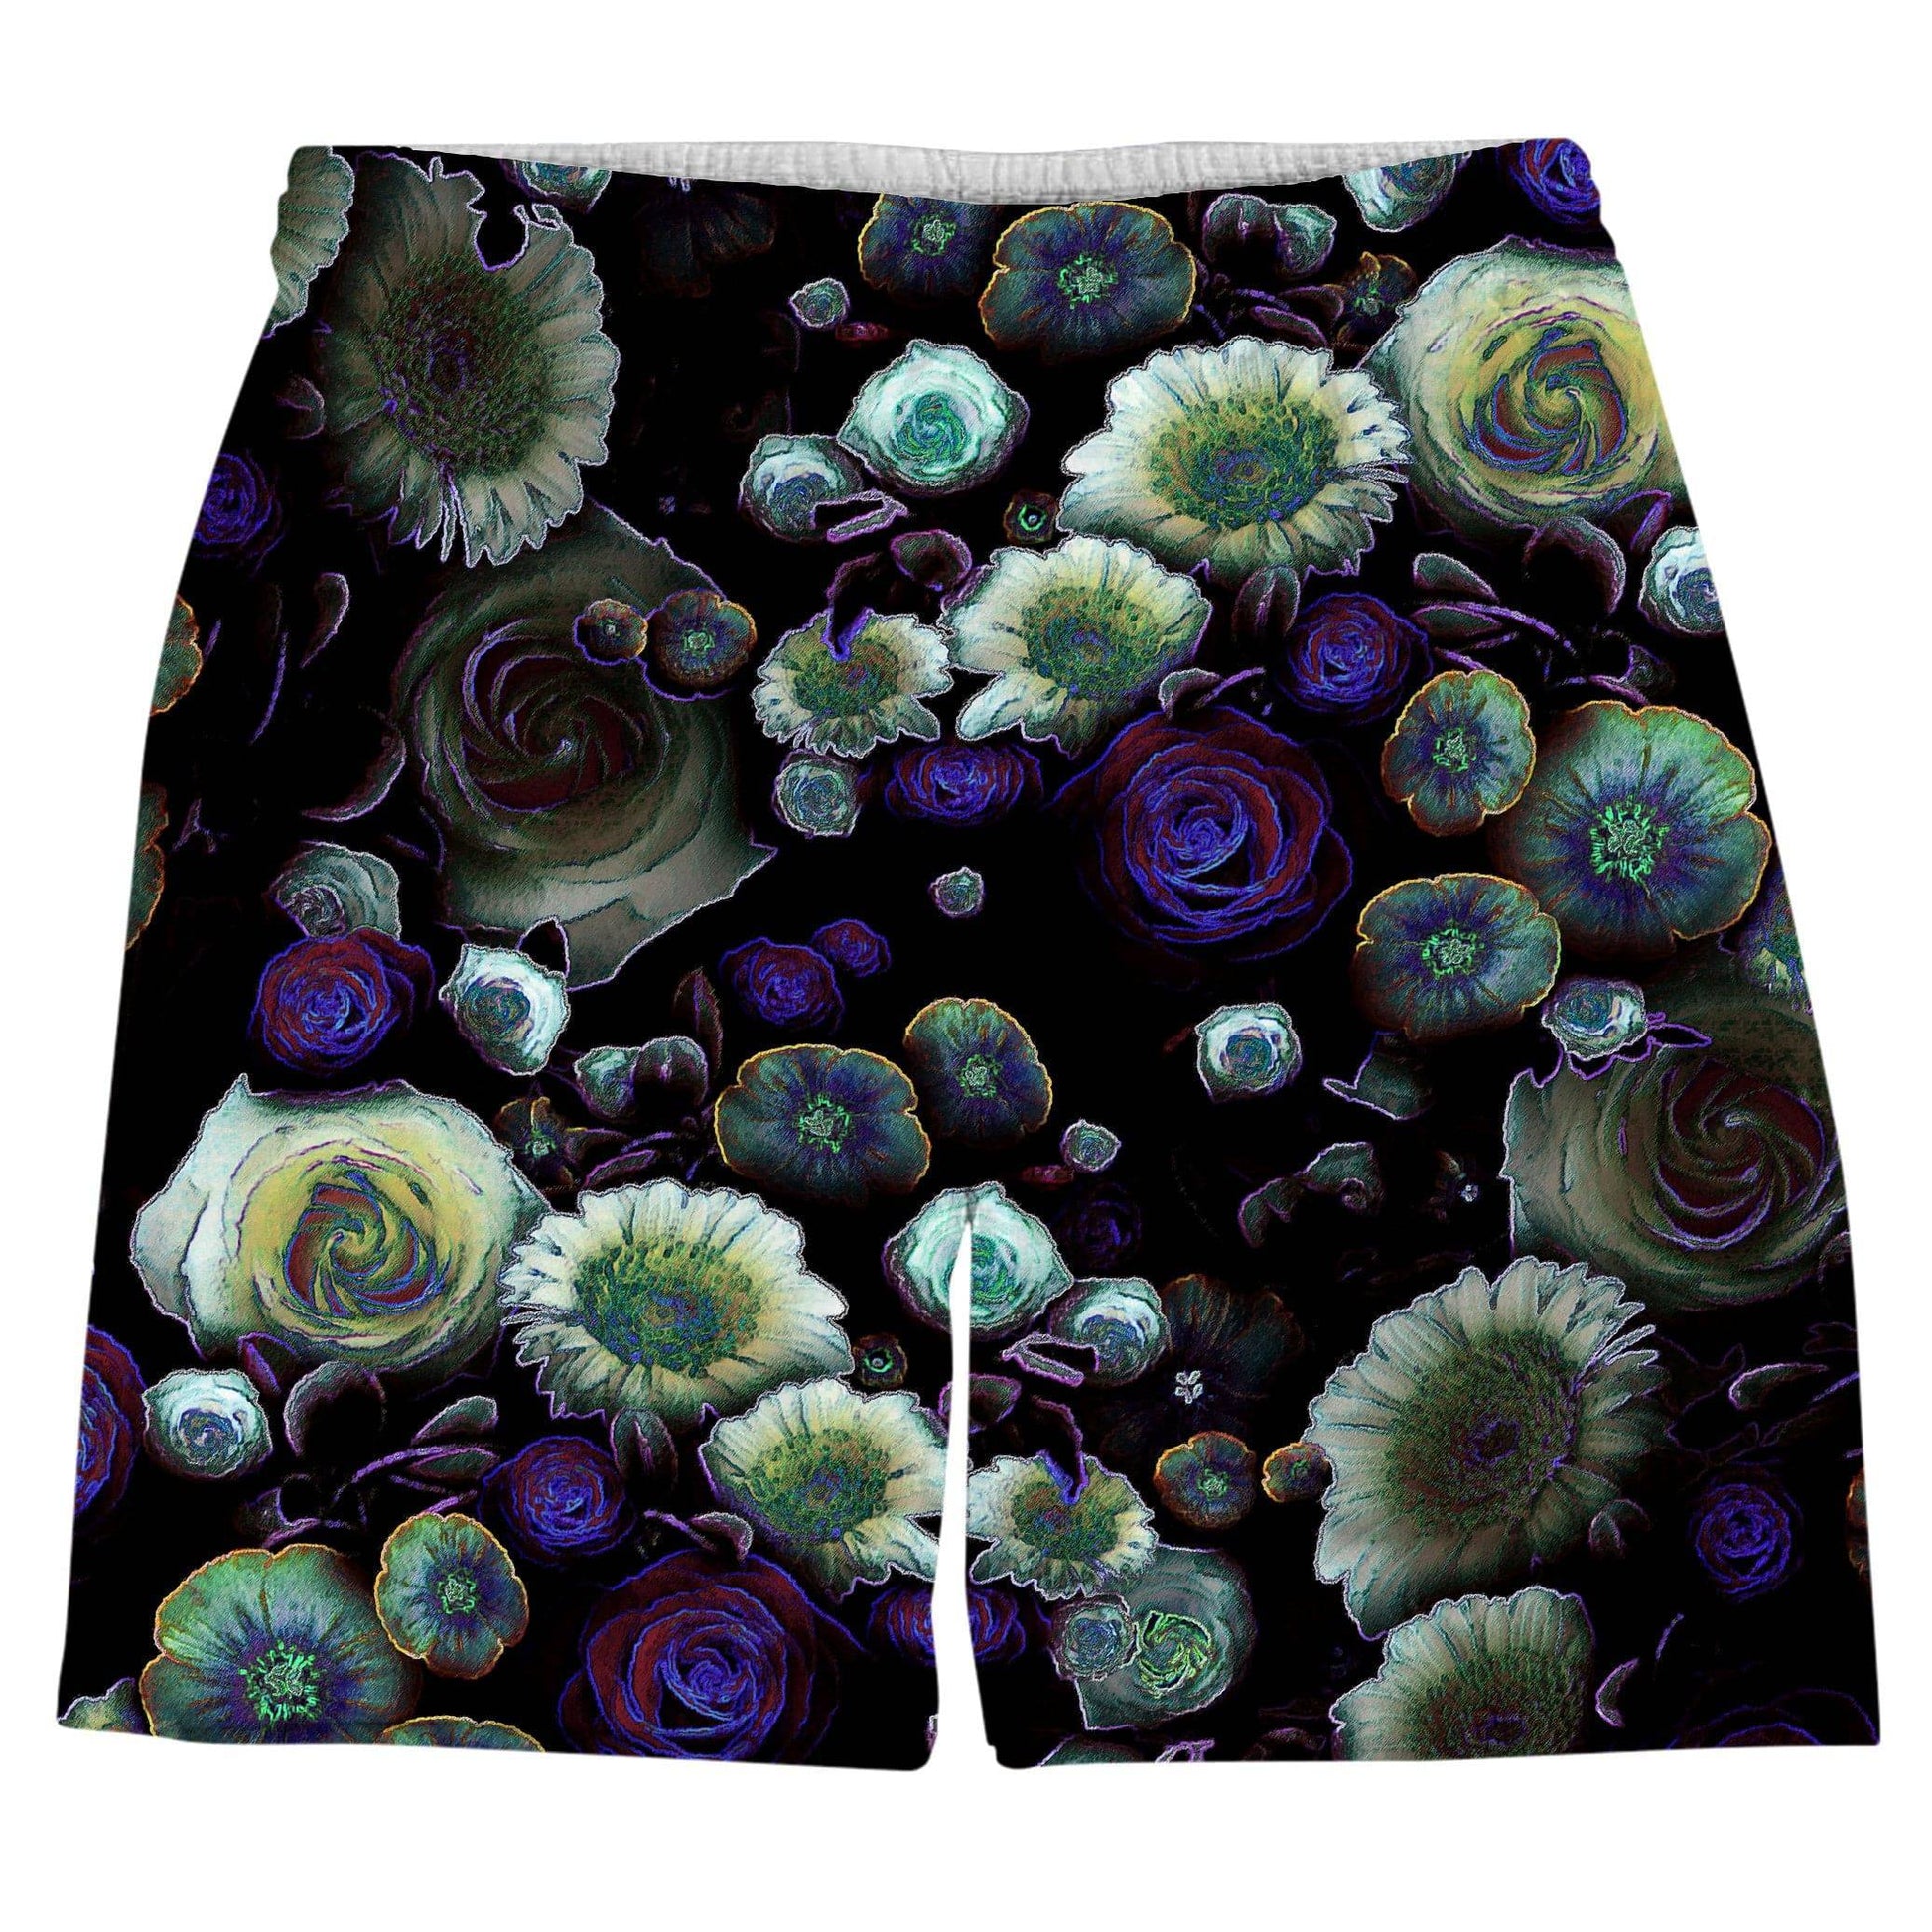 Dark Bloom Tank and Shorts Combo, Yantrart Design, | iEDM